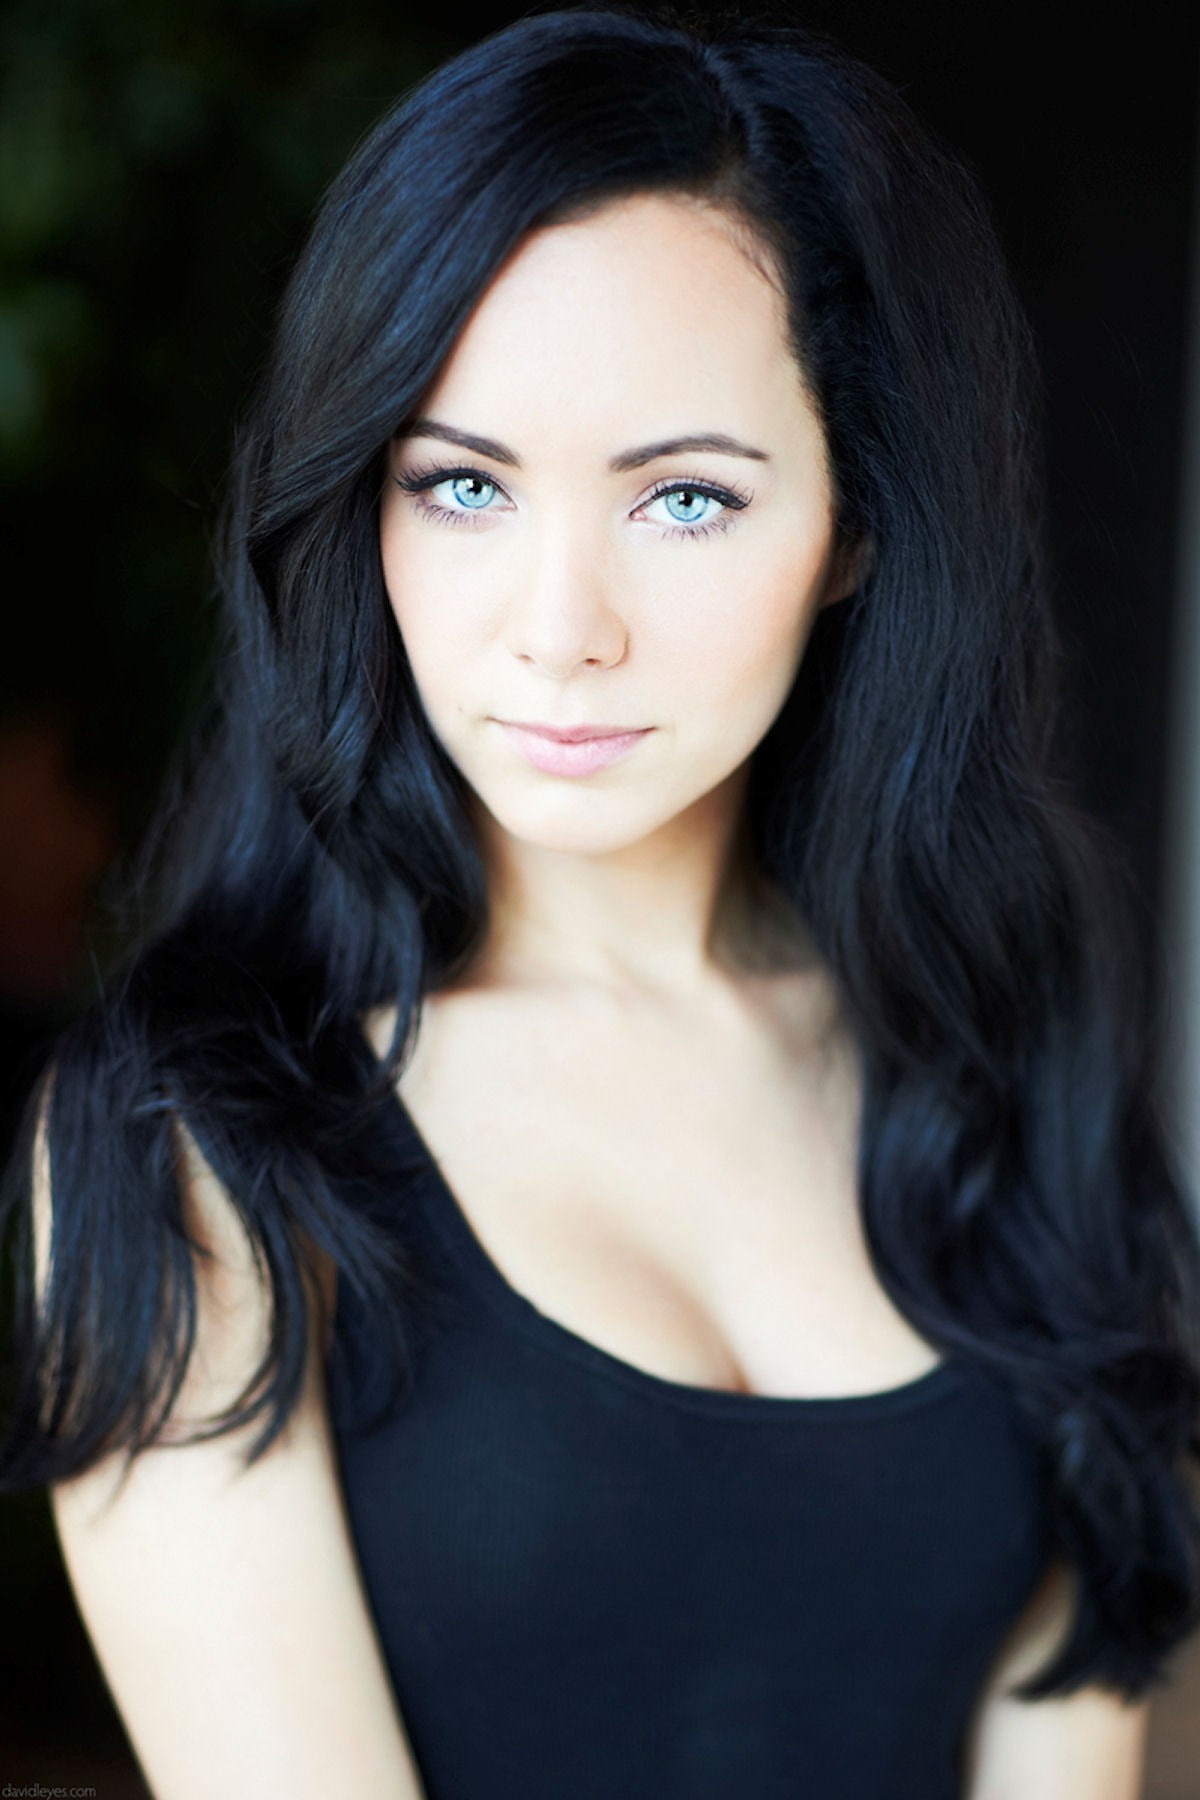 Ksenia Solo, women, black hair, blue eyes, portrait, looking at viewer